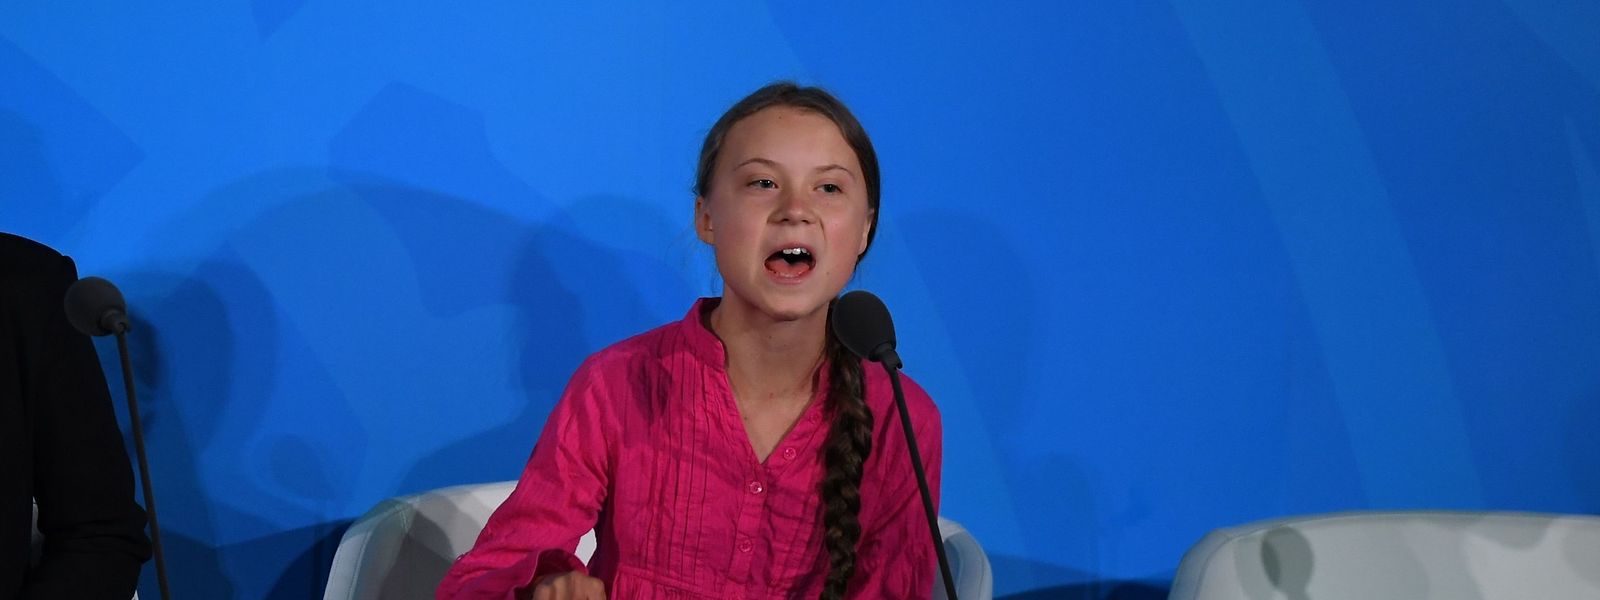 O discurso de Greta Thunberg na cimeira